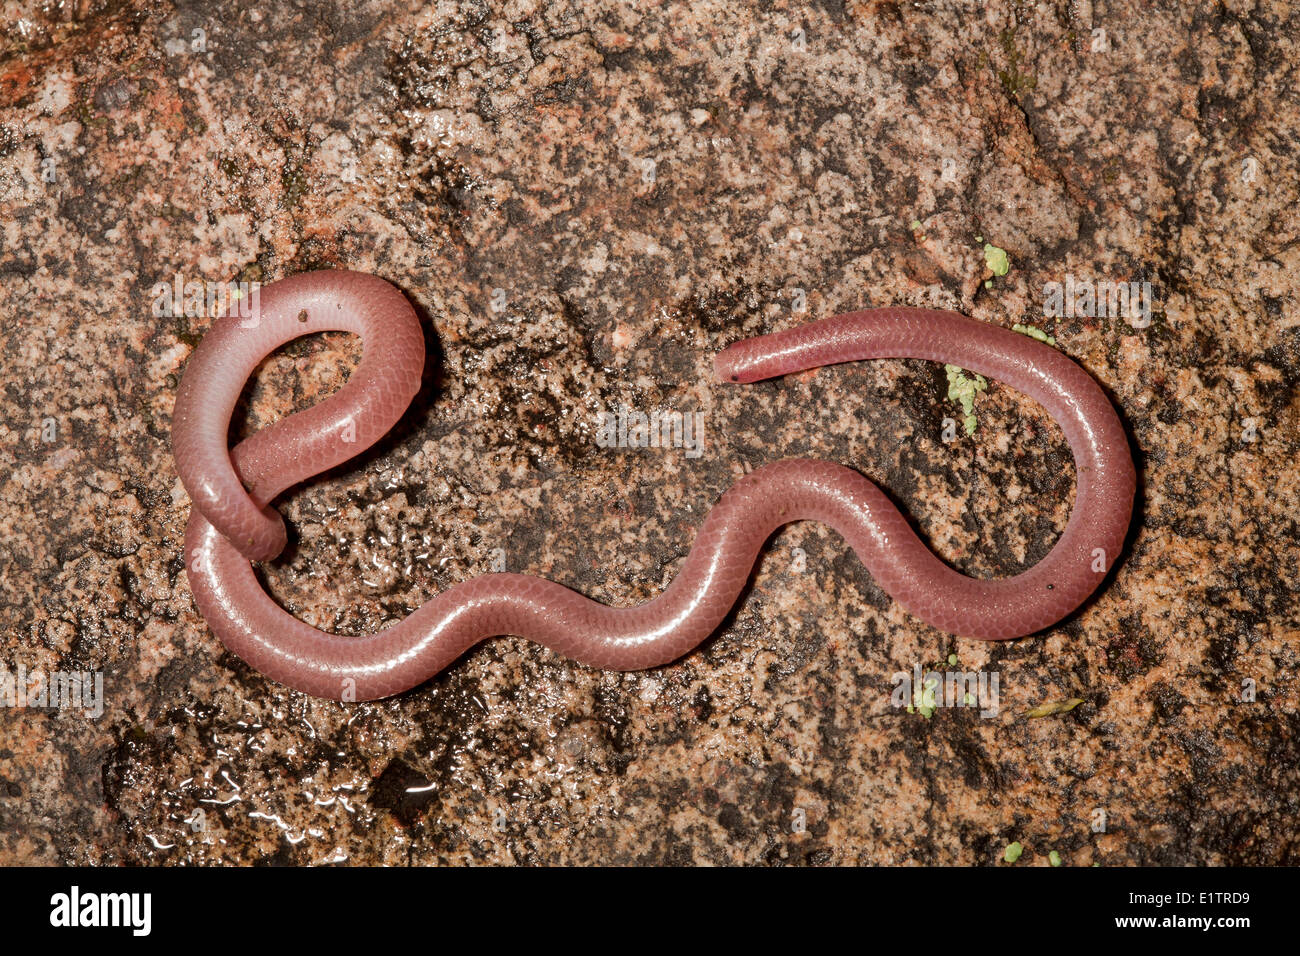 Texas Blind Snake, Leptotyphlops dulcis, Rio Grand, Texas, USA Stock Photo